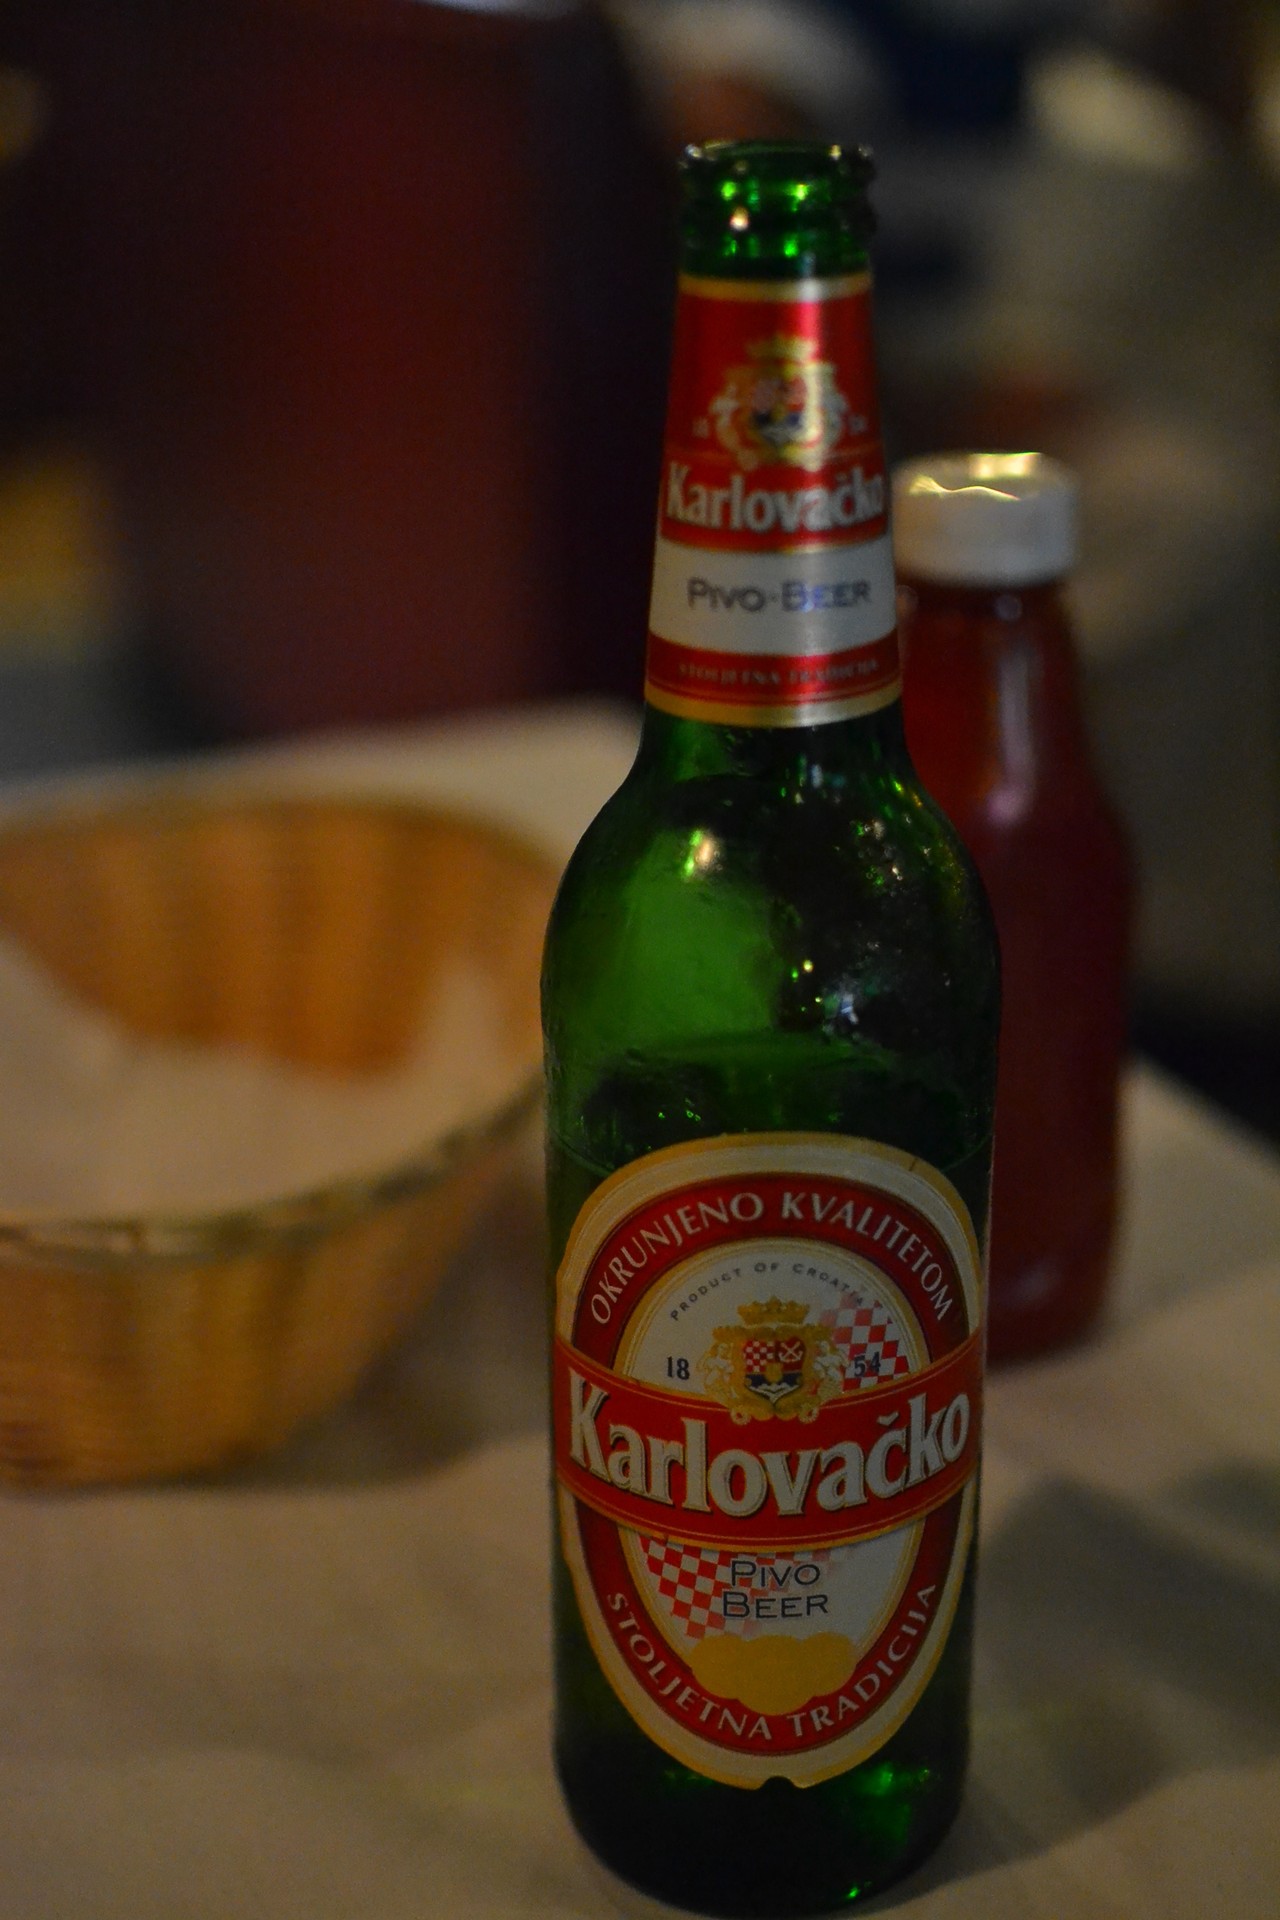 Karlovacko beer from Croatia